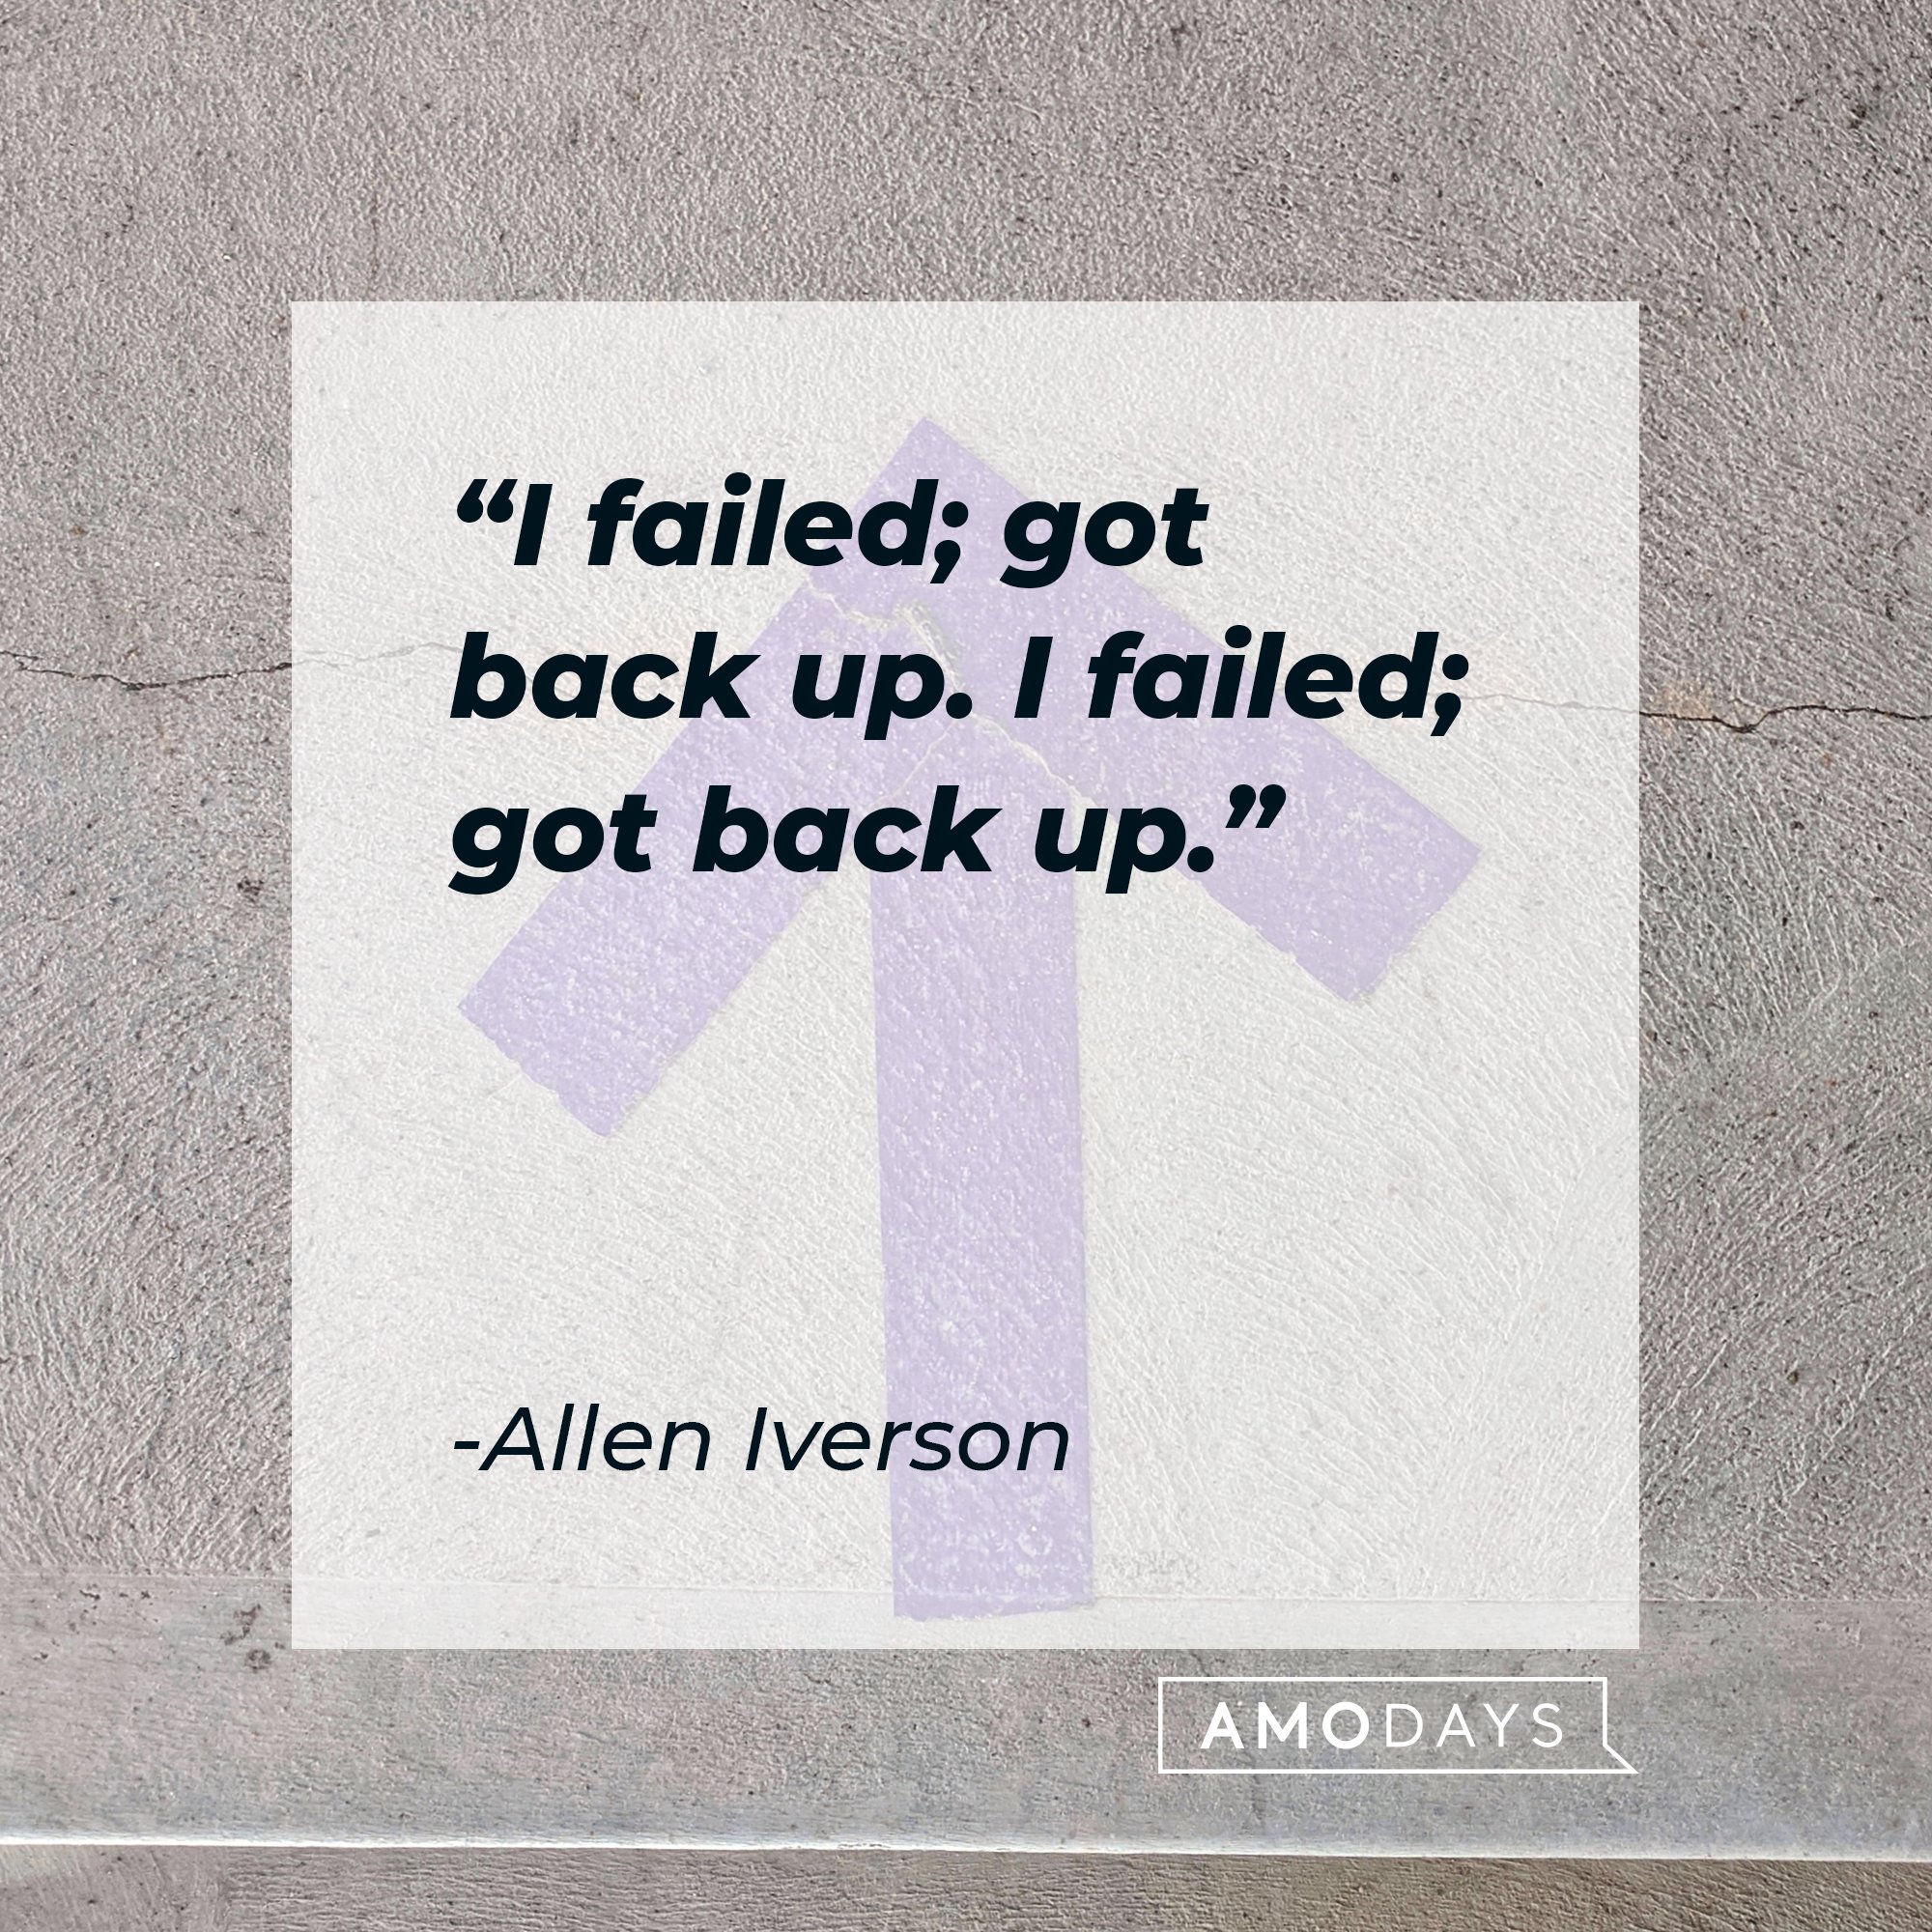 Allen Iverson's quote: "I failed; got back up. I failed; got back up." | Image: AmoDays